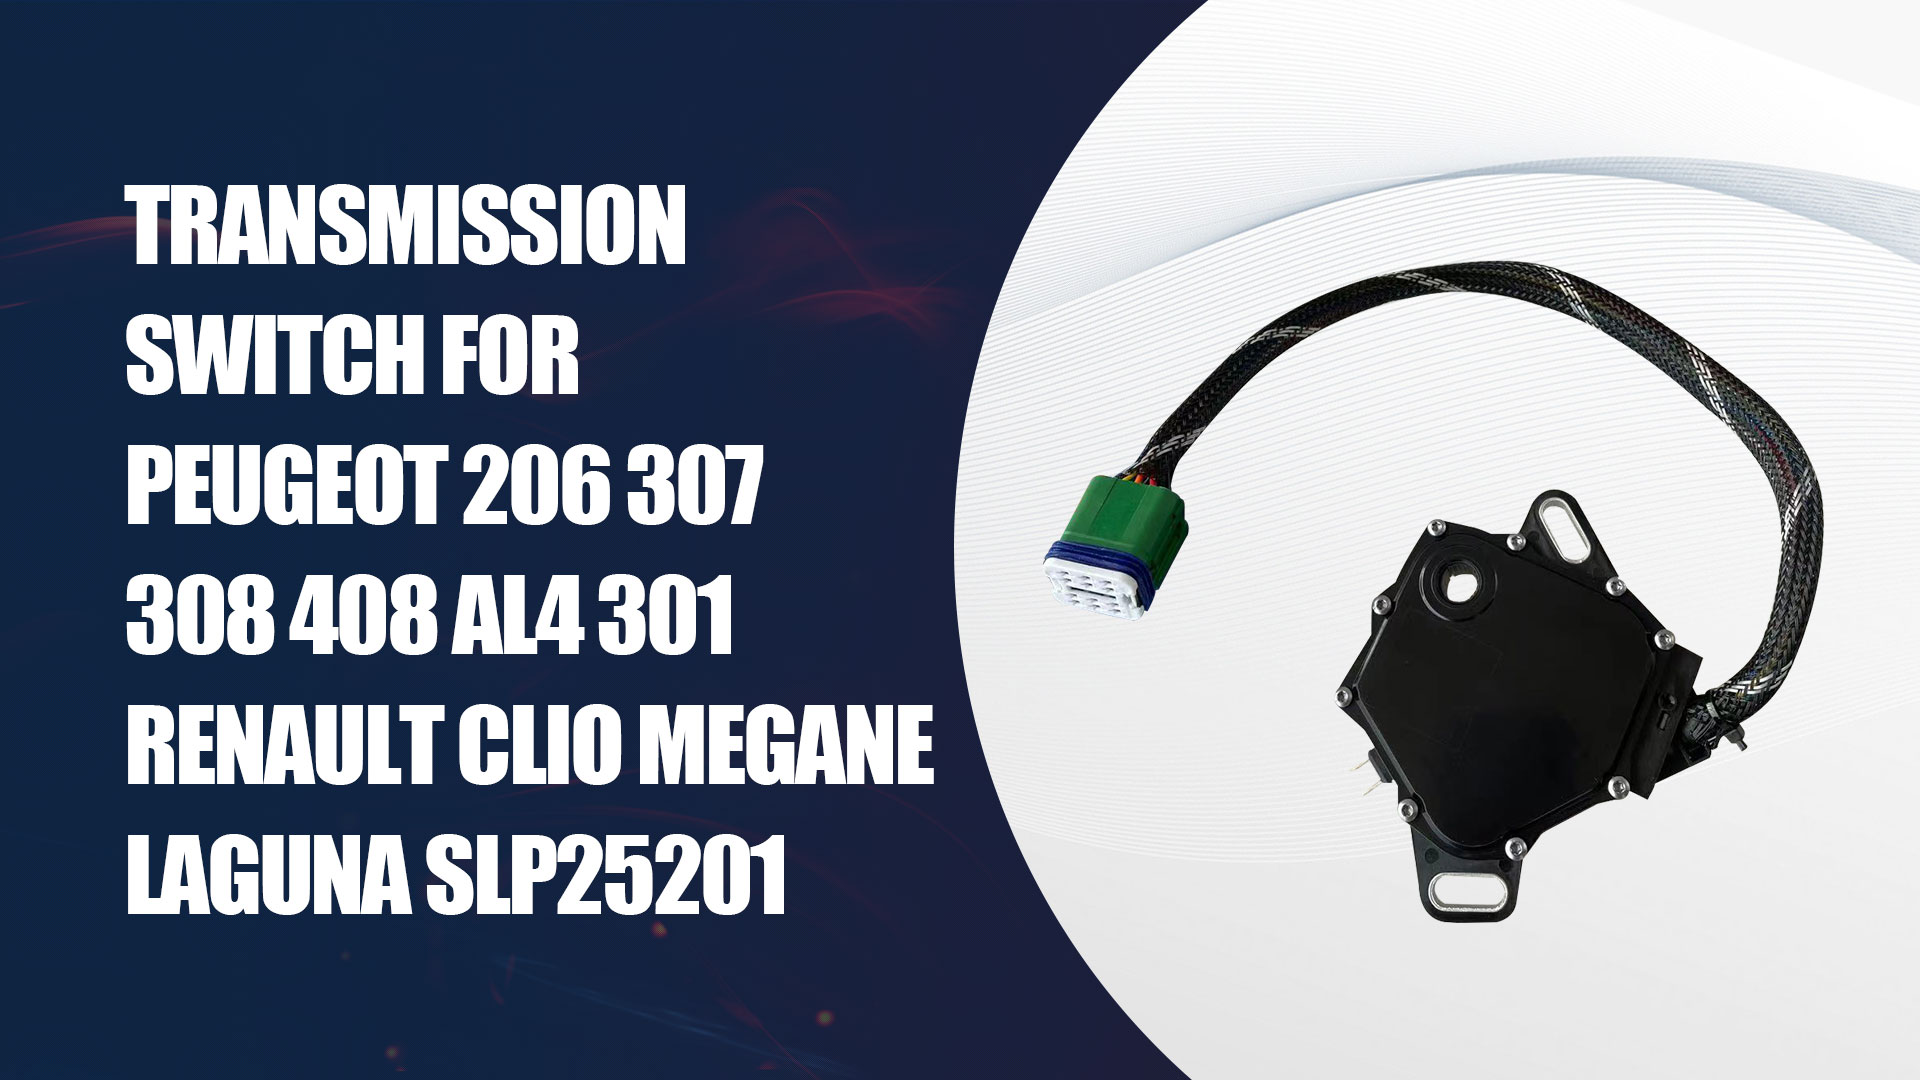 Interruptor de transmisión para Peugeot 206 307 308 408 Al4 301 Renault Clio Megane Laguna Slp25201